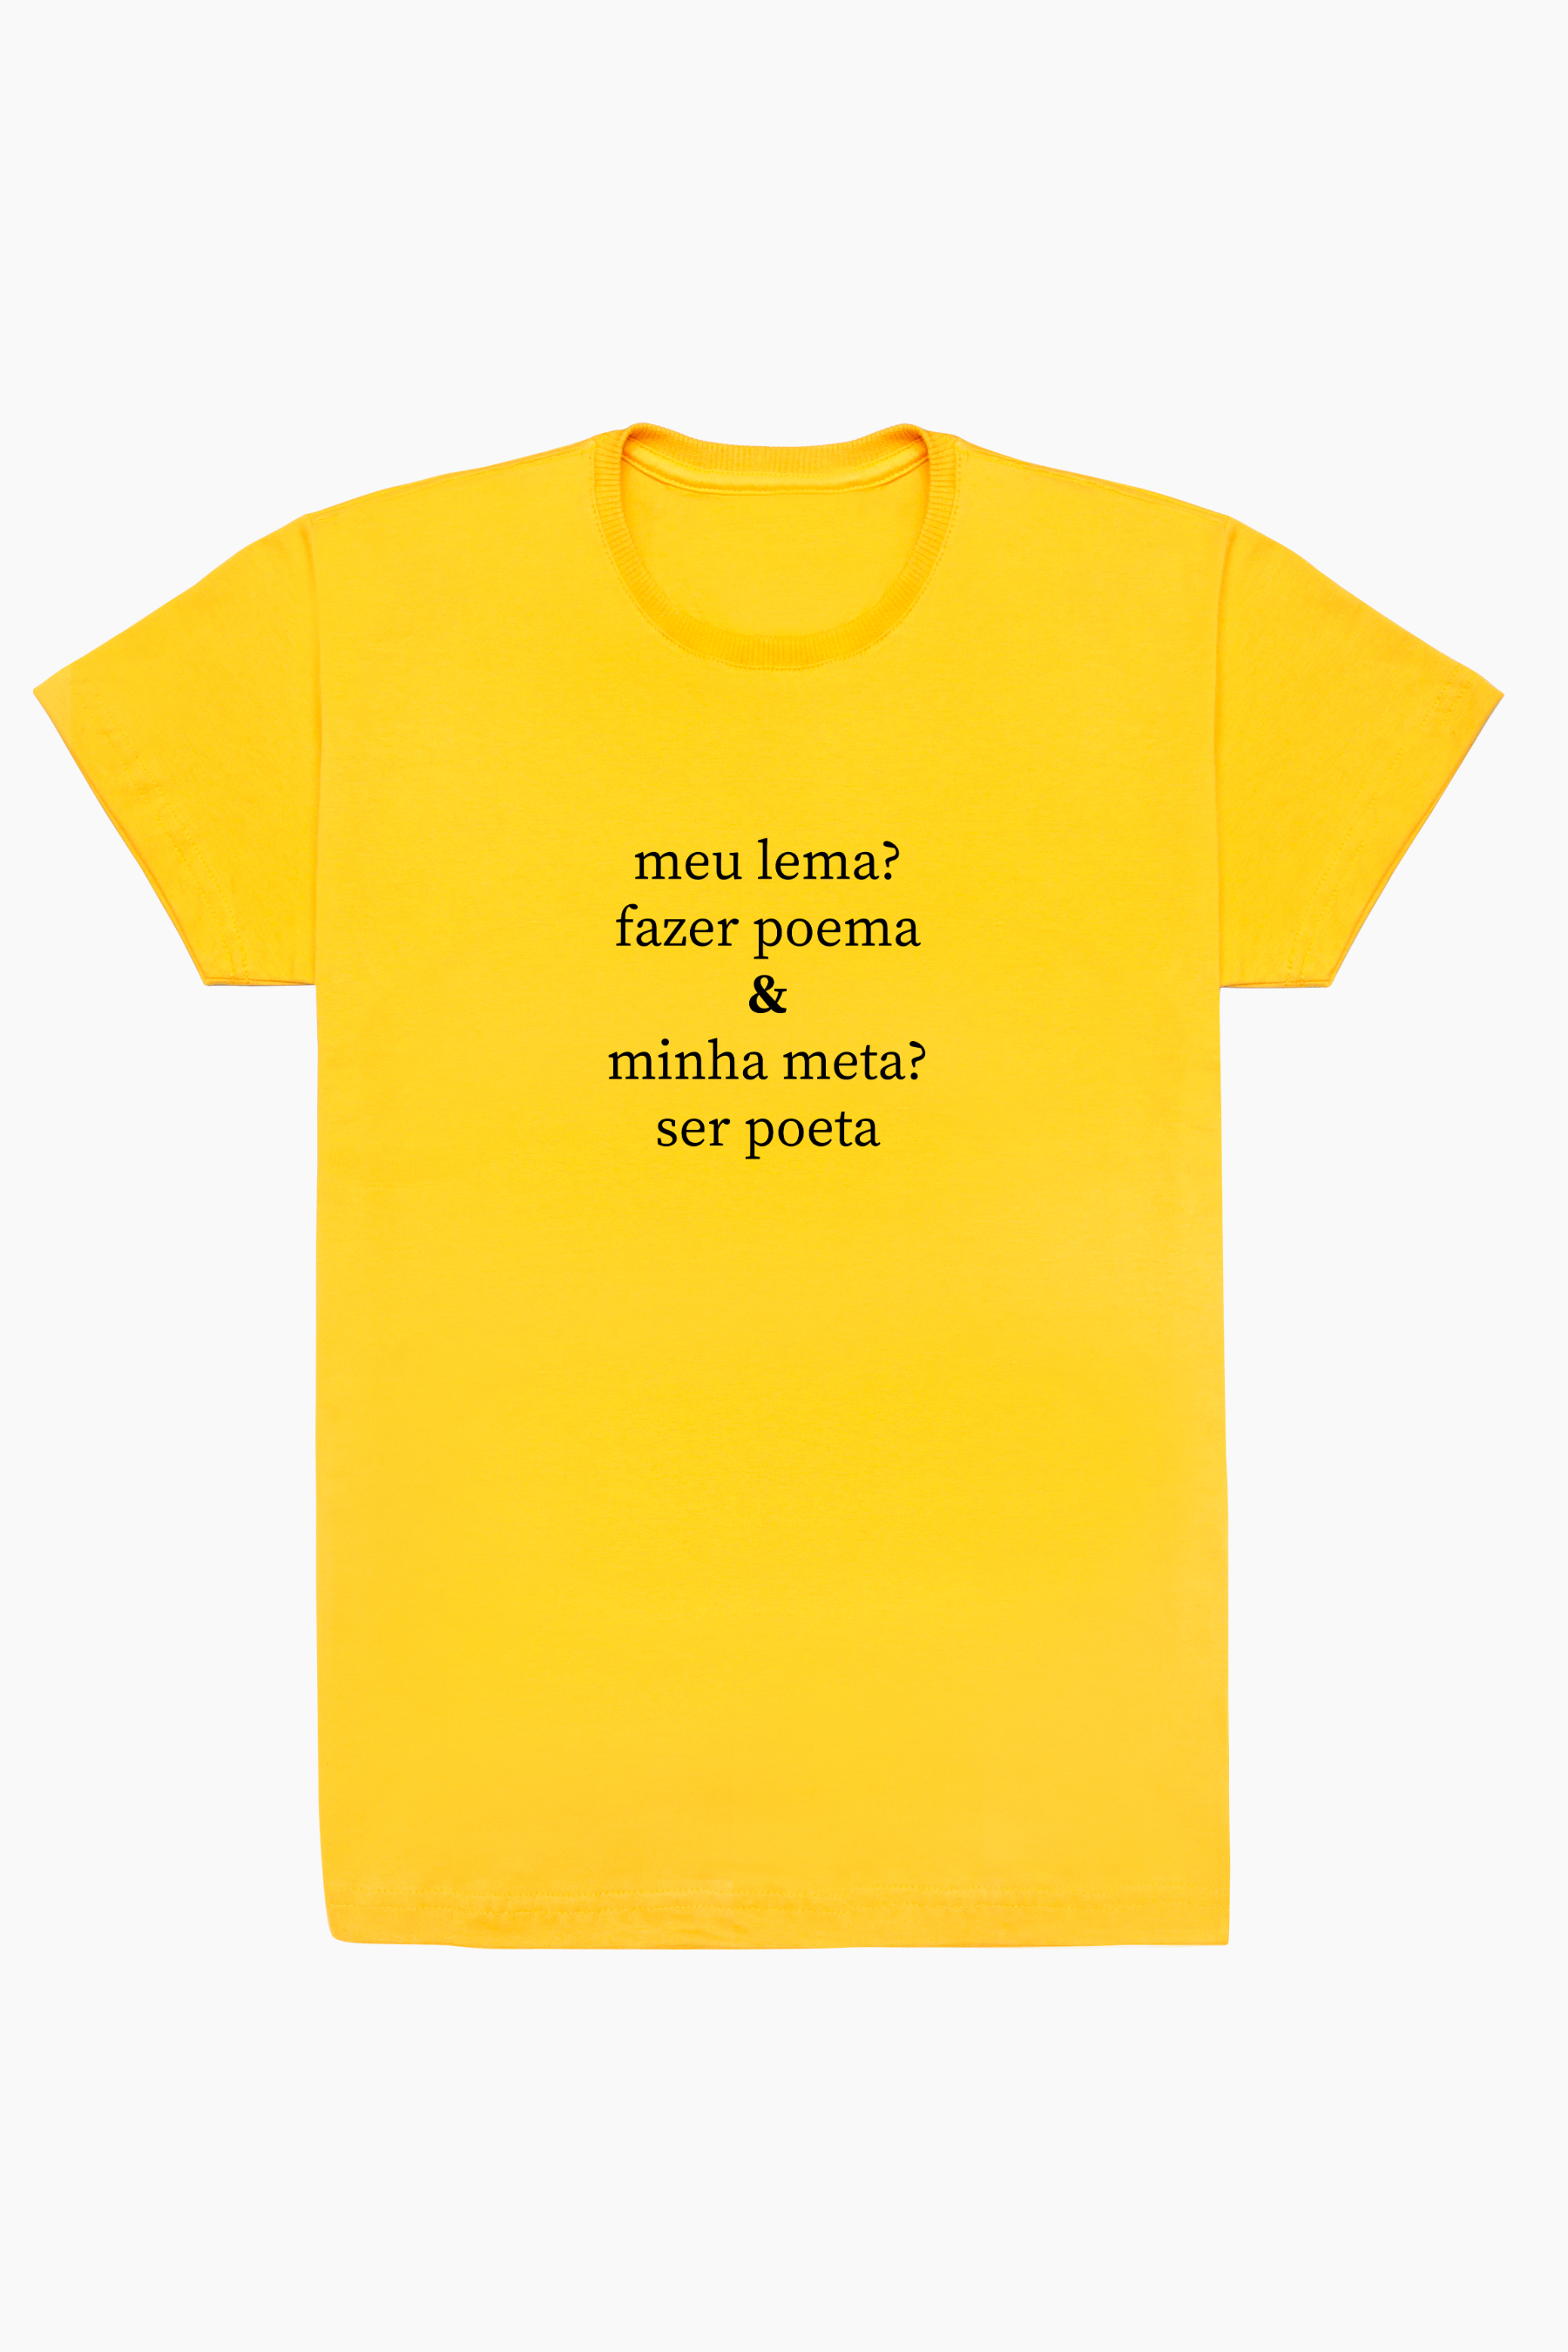 Camiseta Camiseta a revelia - Meu lema? fazer poema & minha meta? ser  poeta. - a revelia